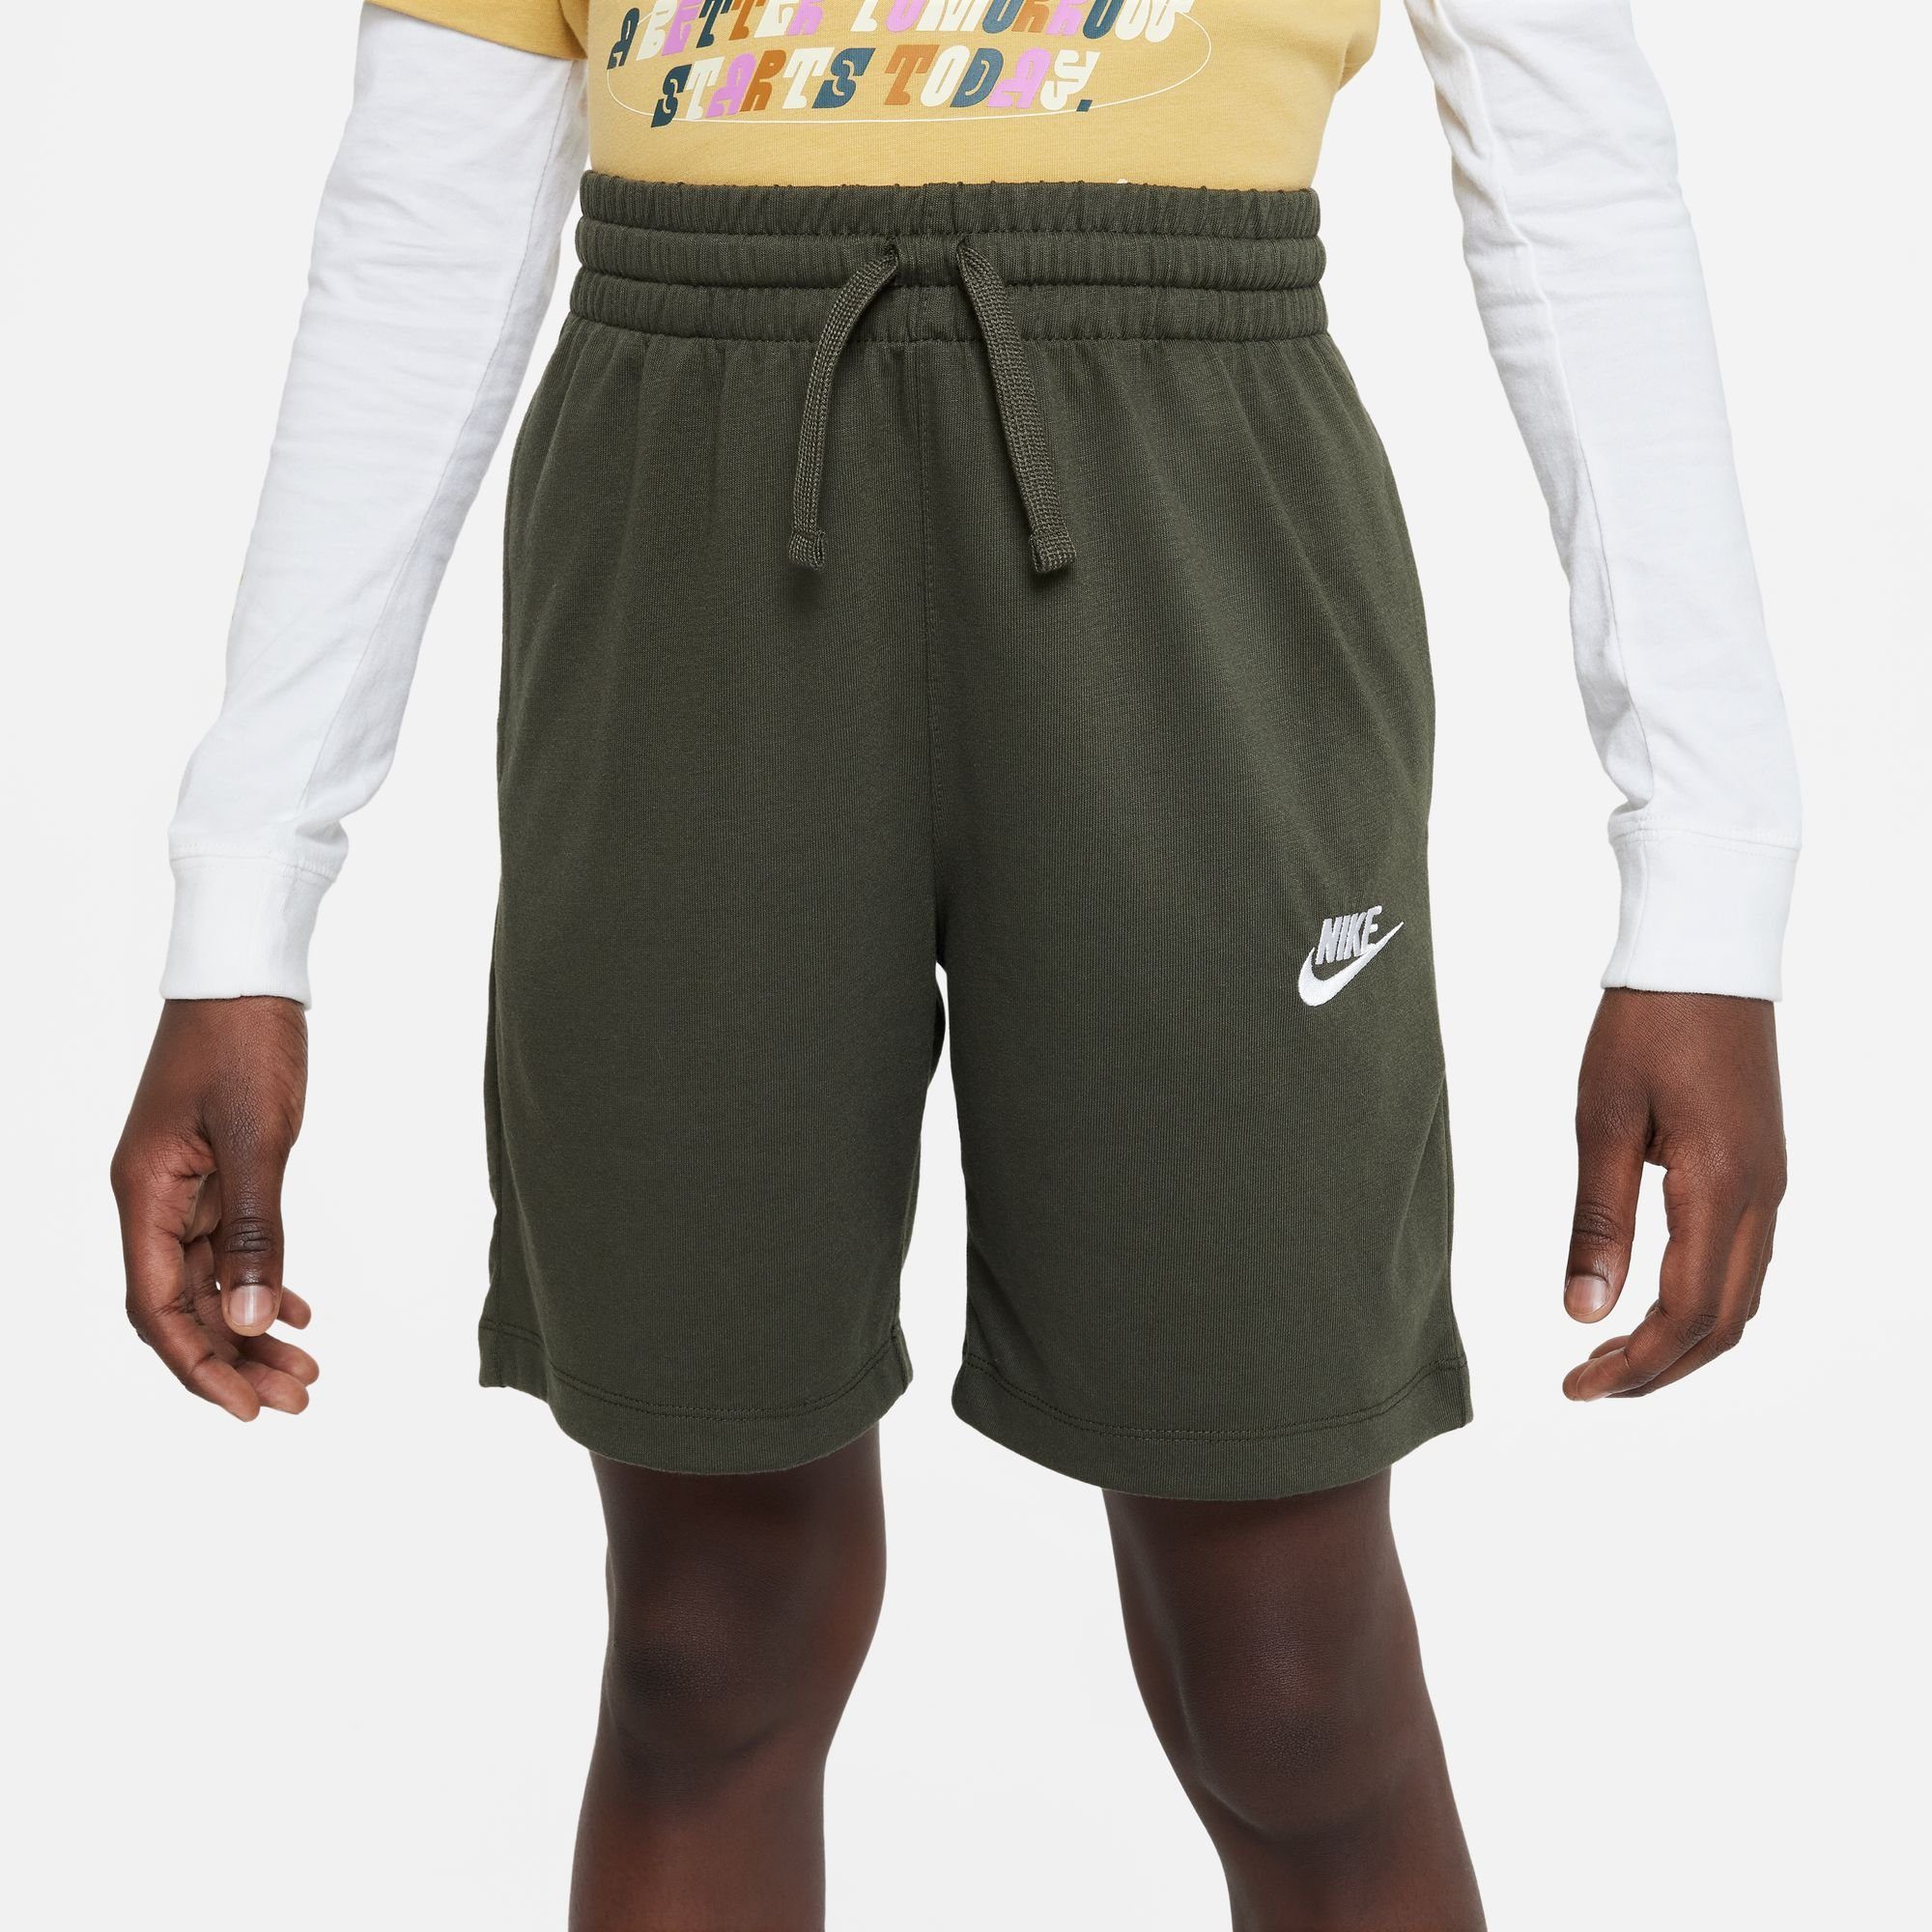 SHORTS BIG KHAKI/WHITE Sportswear Nike KIDS' (BOYS) CARGO JERSEY Shorts